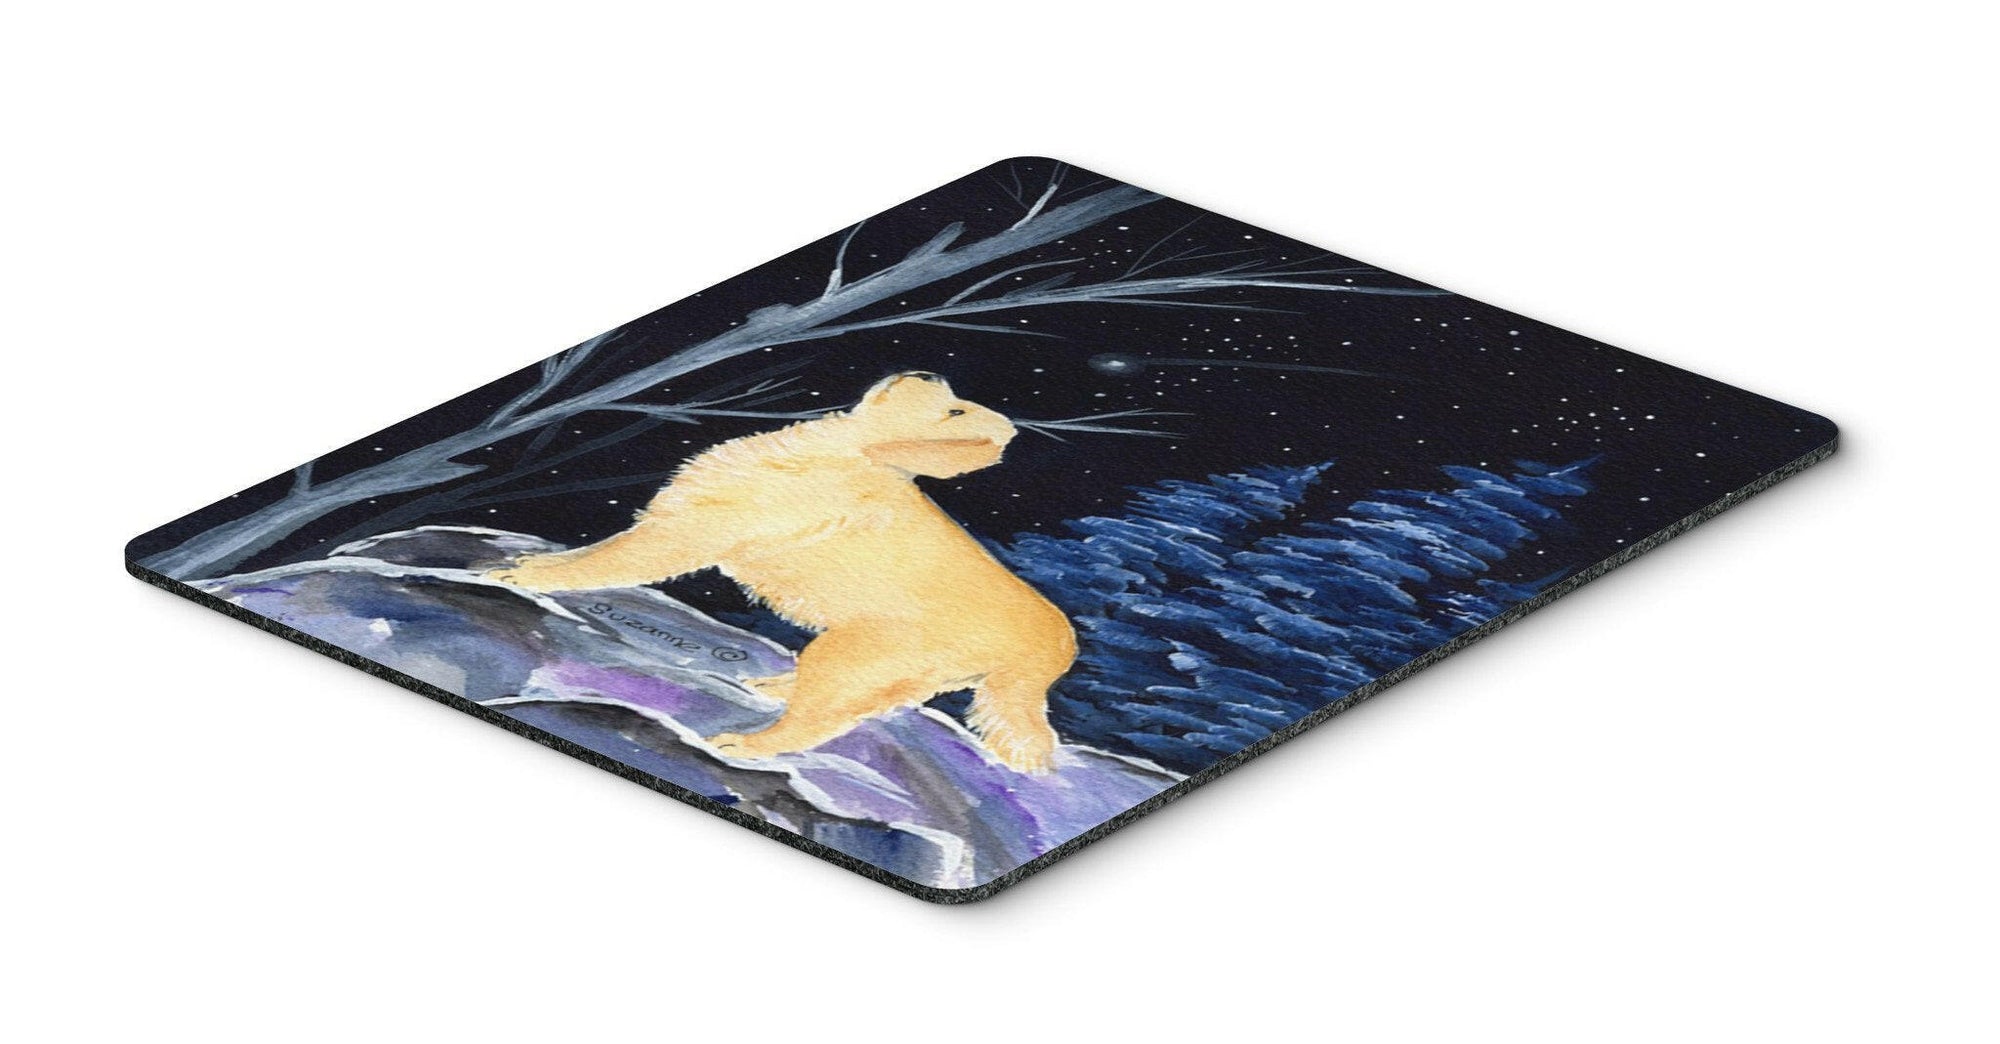 Starry Night Golden Retriever Mouse Pad / Hot Pad / Trivet by Caroline's Treasures